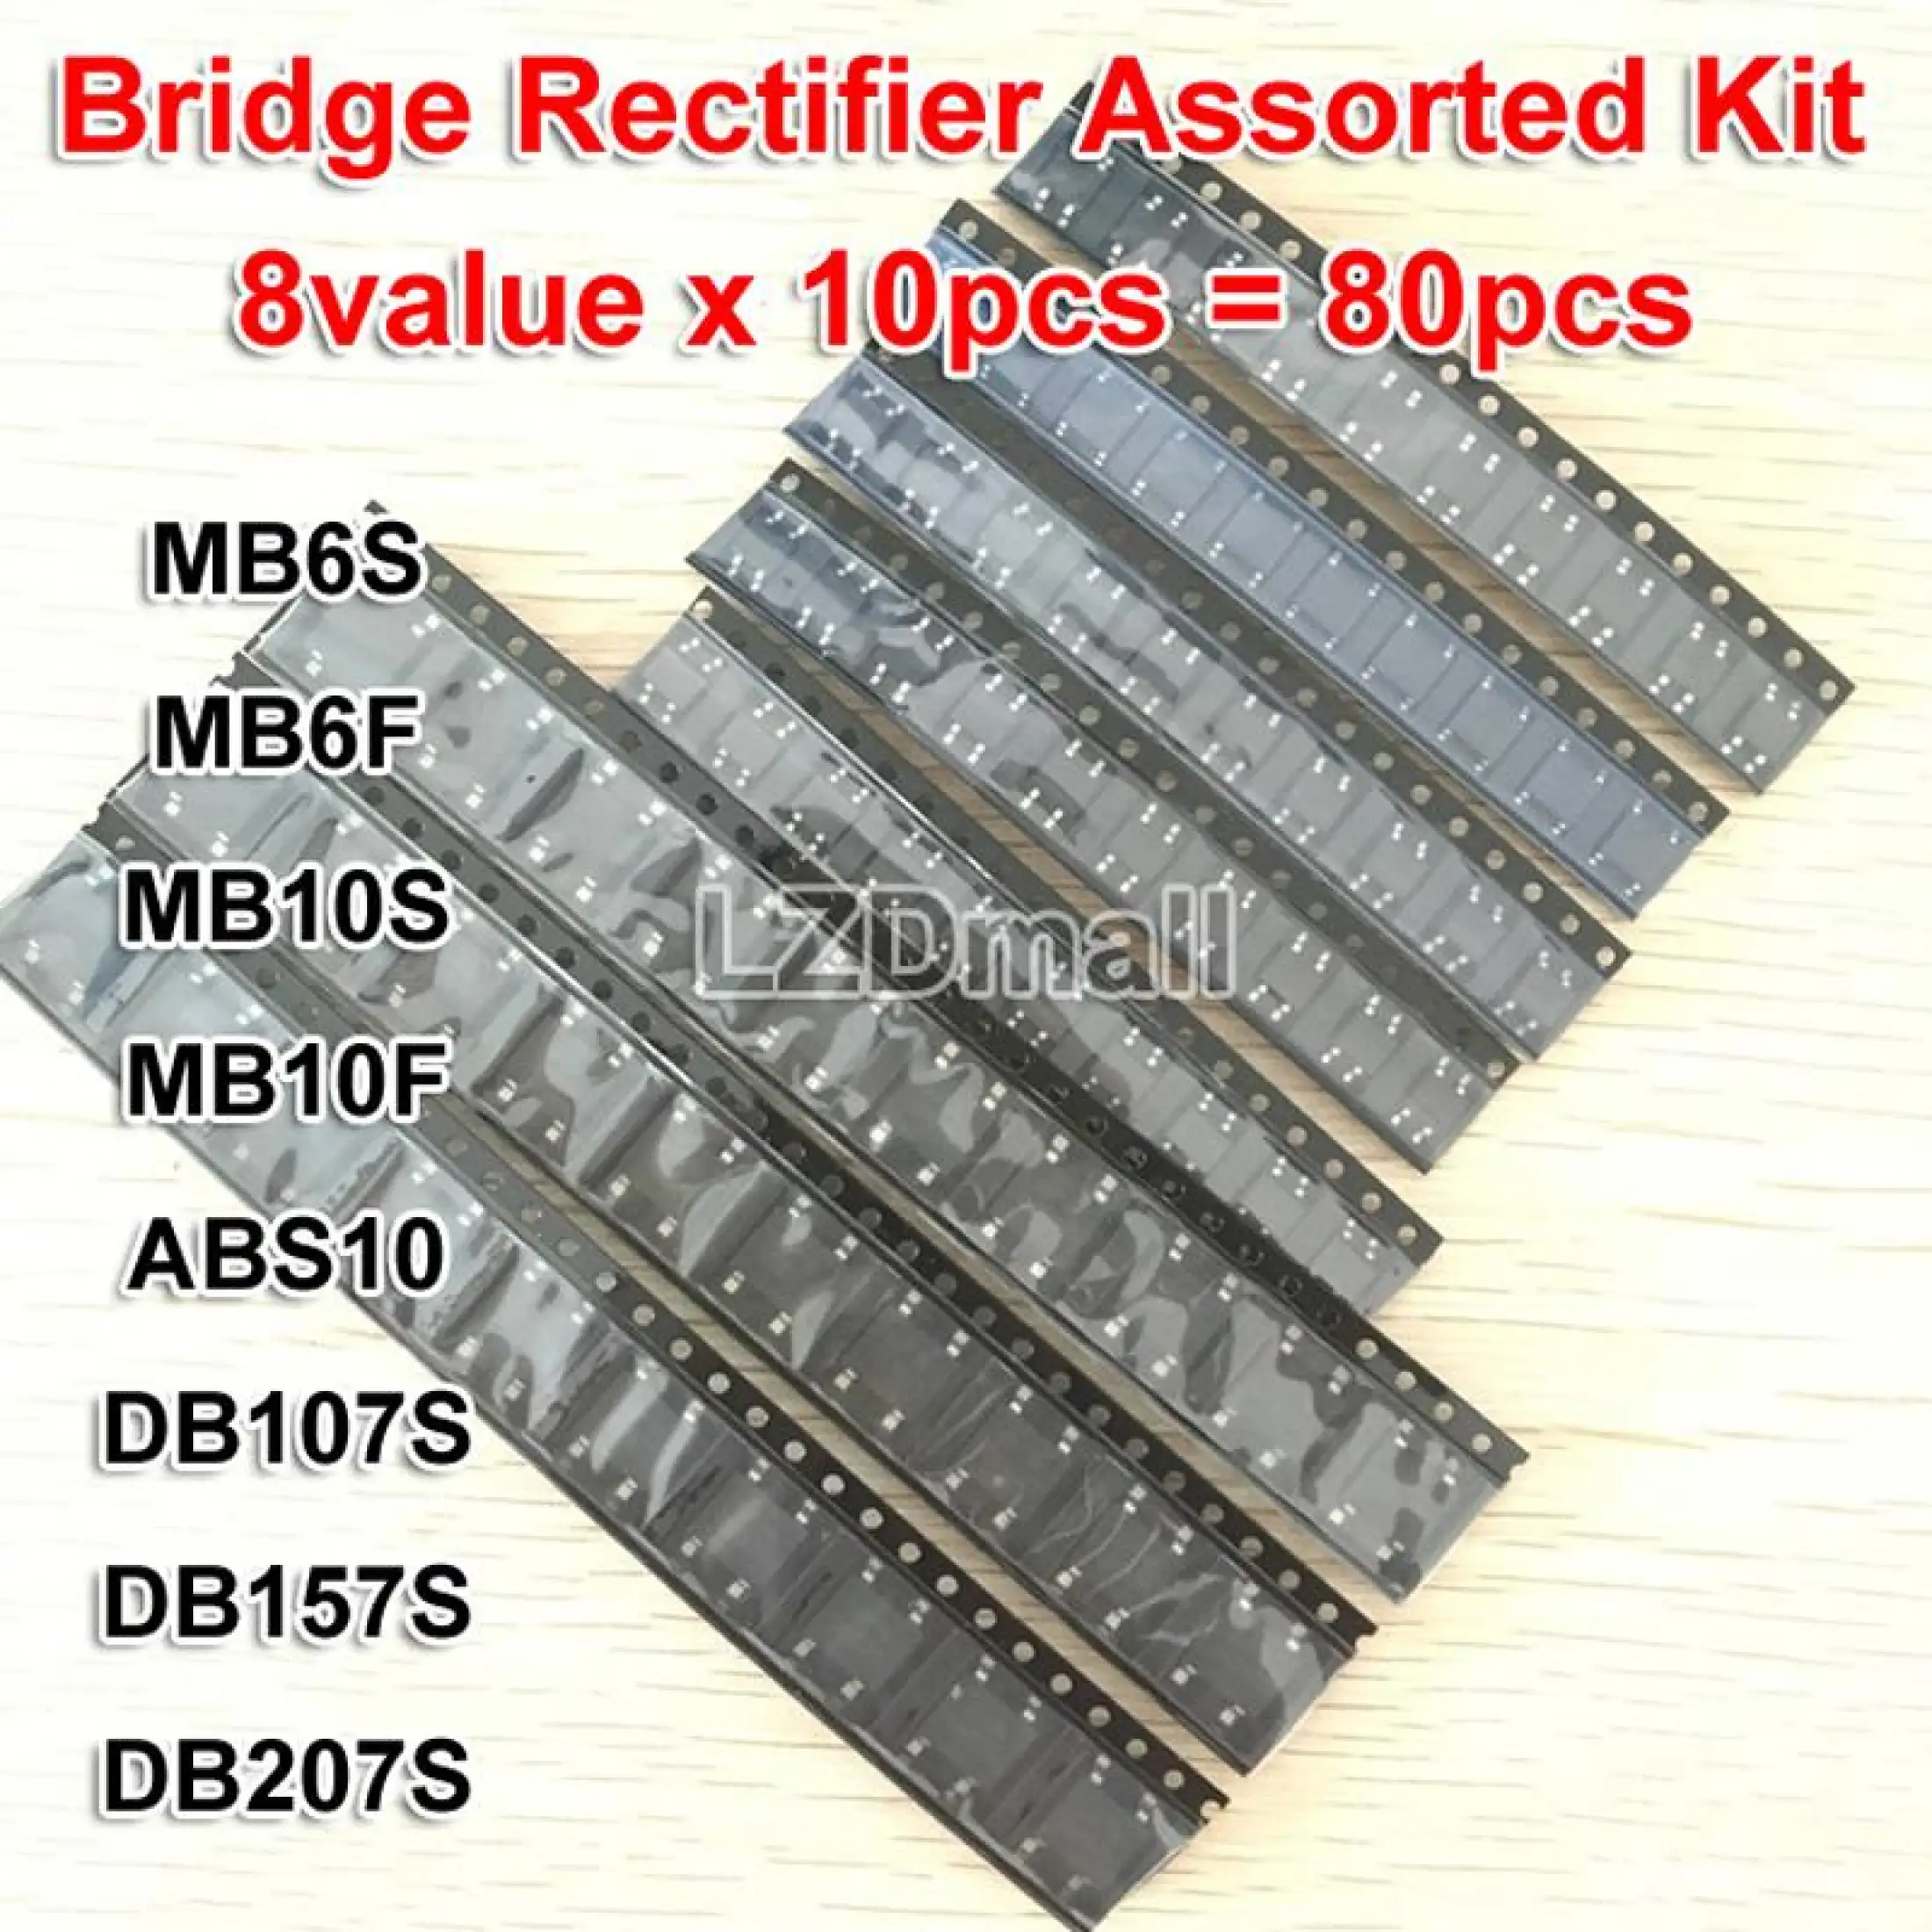 8value*10pcs=80pcs Bridge Rectifier Assorted Kit contains MB6S MB6F MB10S MB10F